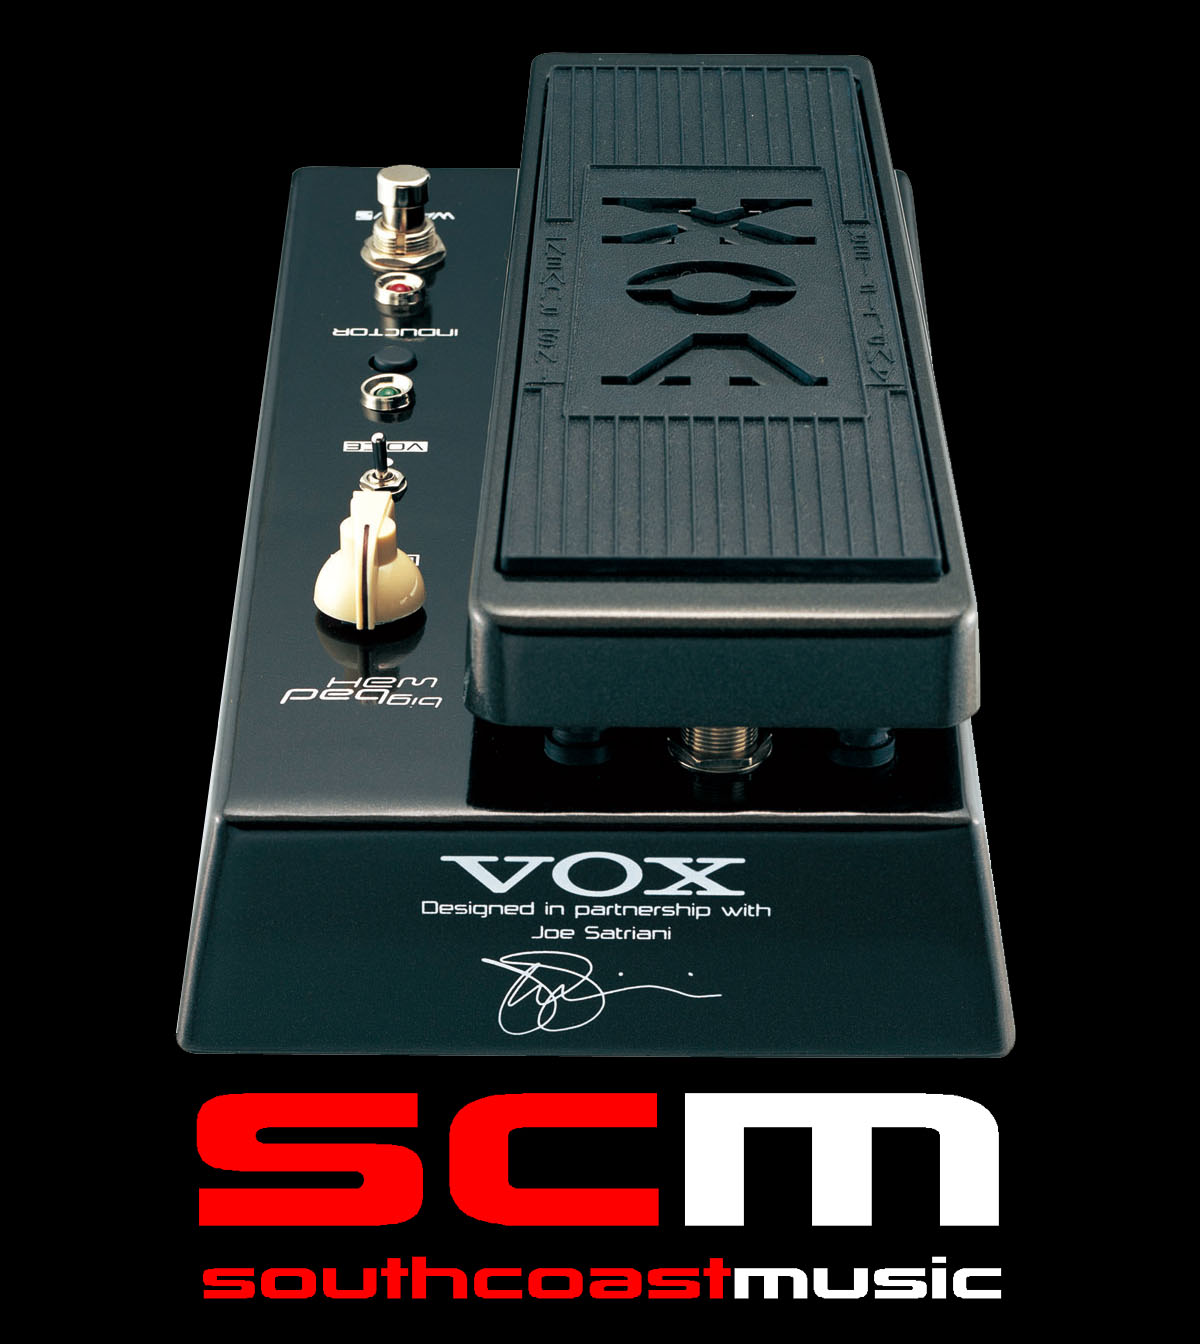 VOX Joe Satriani Big Bad Wah Pedal Limited Edition - LAST ONE!